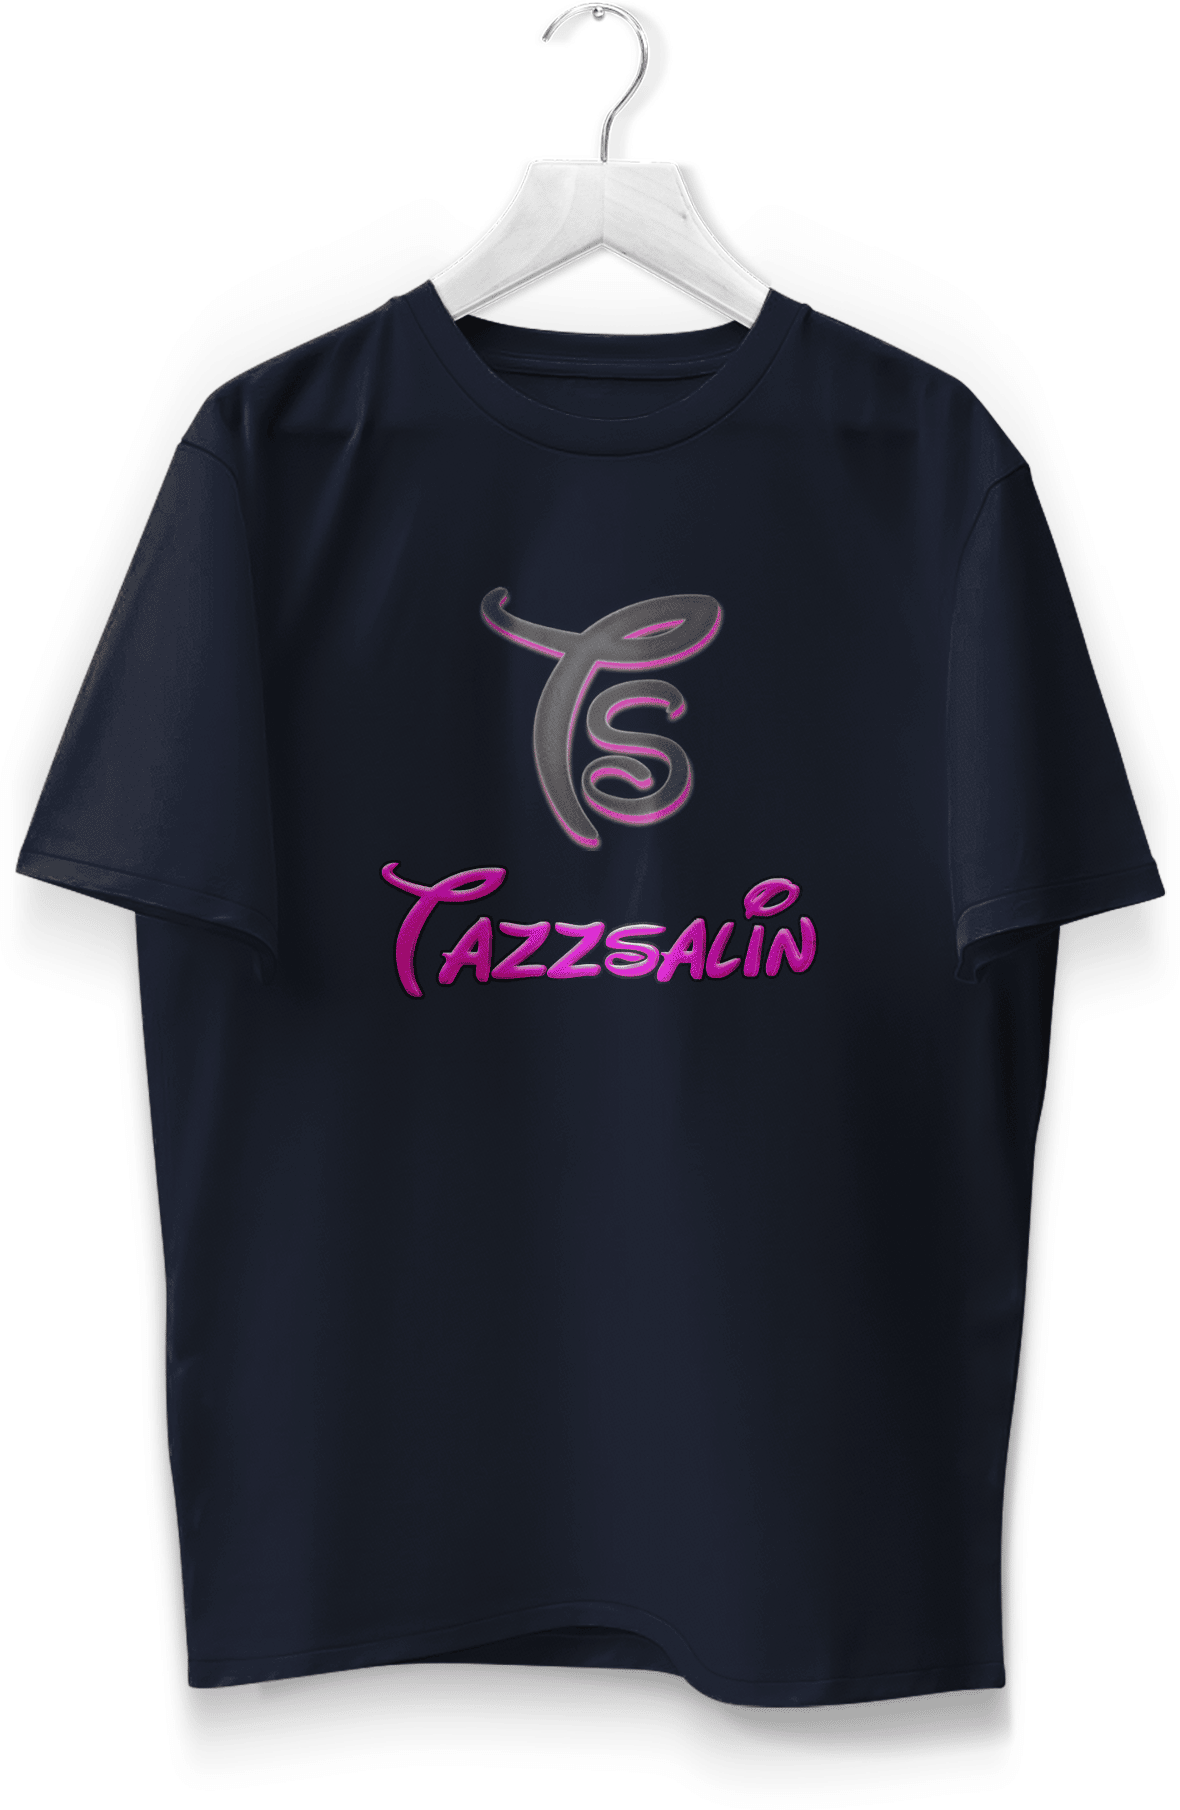 TazzSalin T-Shirt: Badge